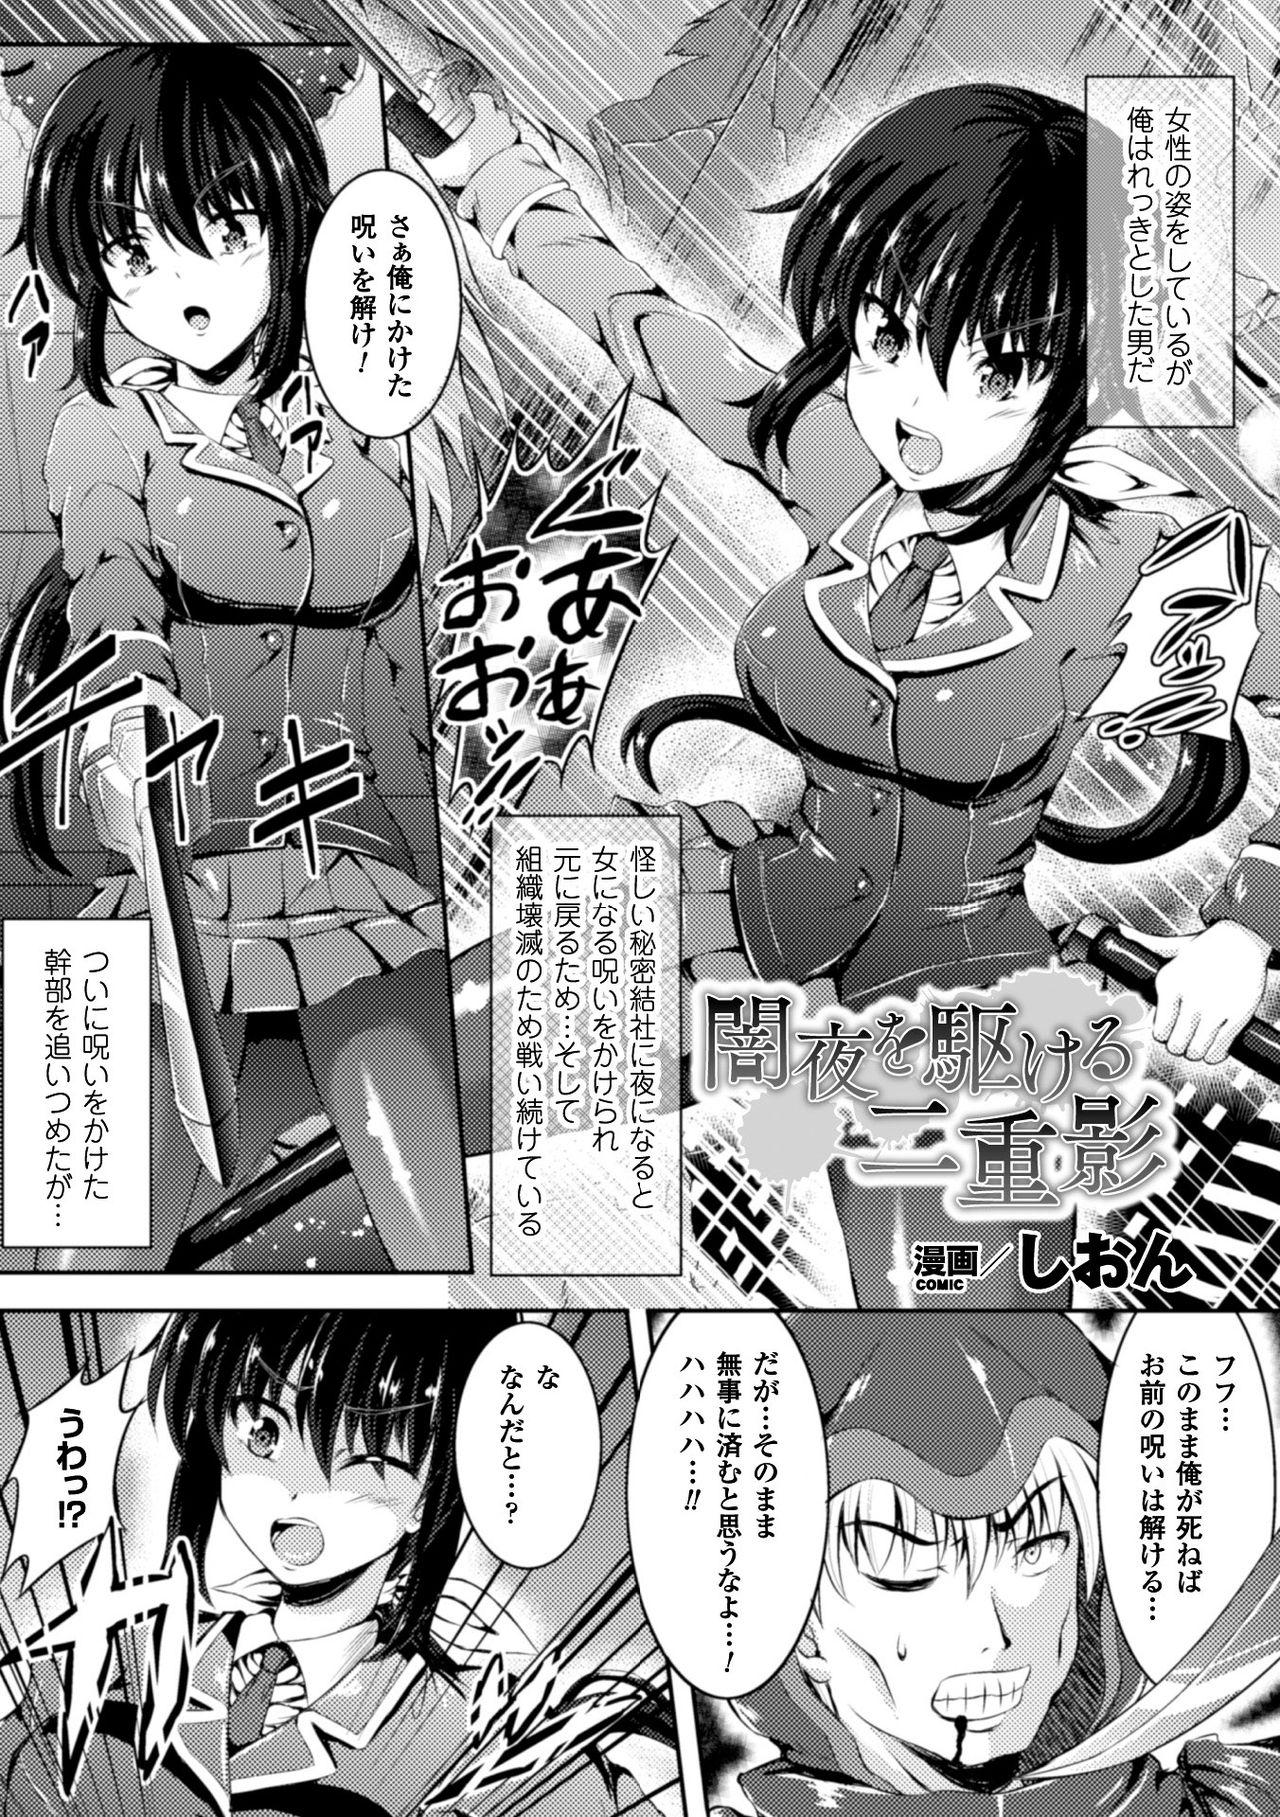 Sister 2D Comic Magazine TS Jibun Heroine mou Hitori no Ore ga Erosugite Gaman Dekinee! Vol. 1 Squirting - Page 3